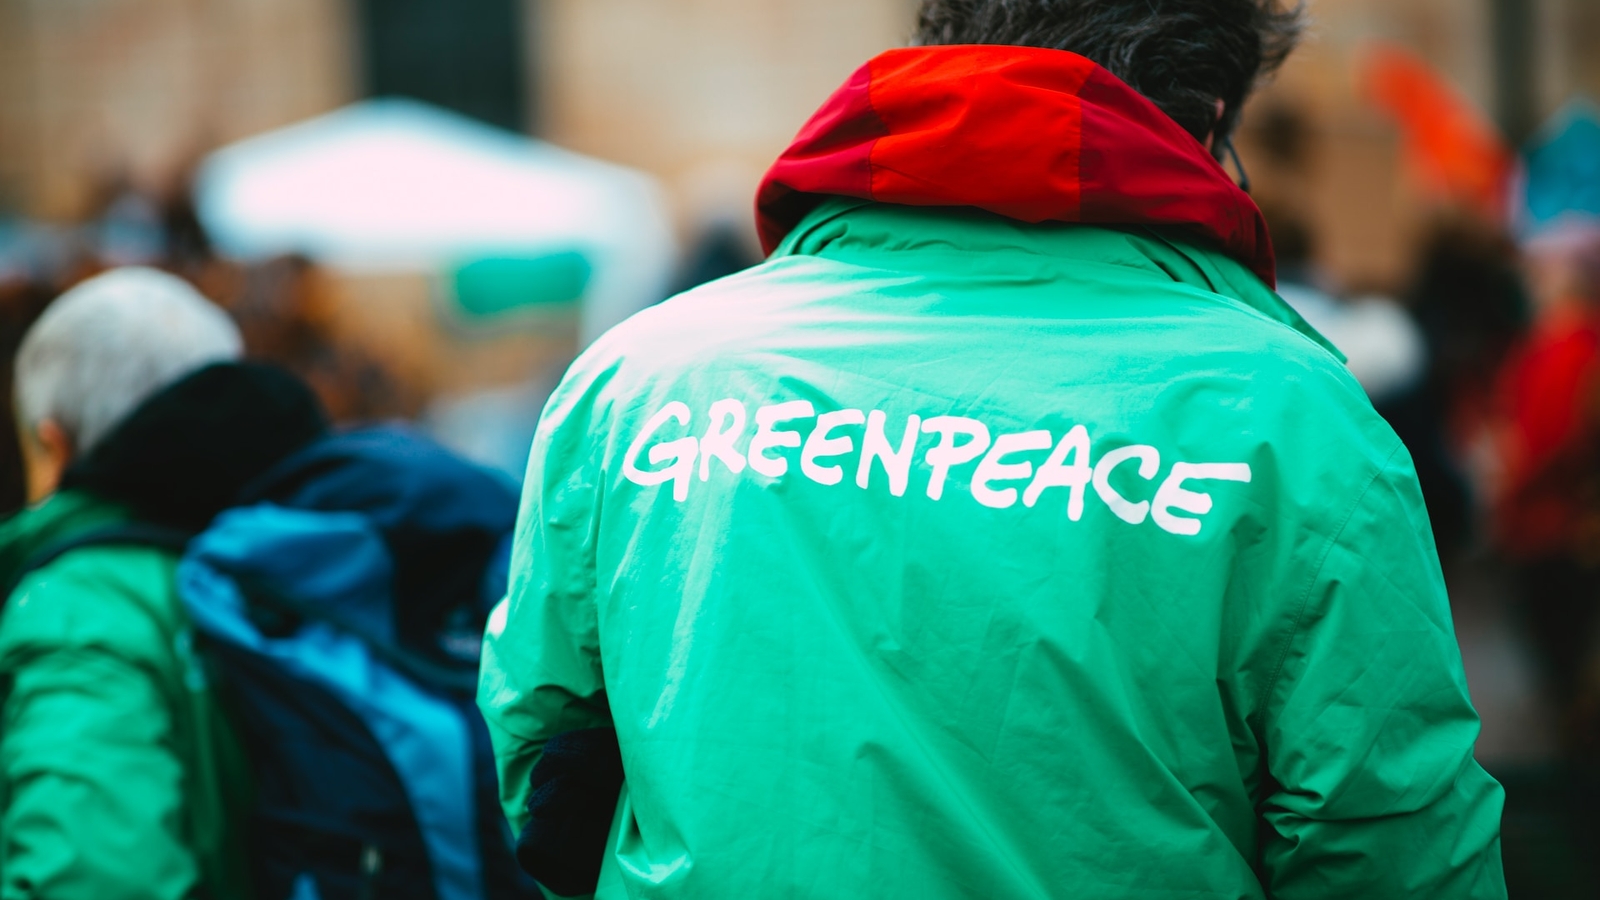 Someone wearing a green Greenpeace jacket on the street